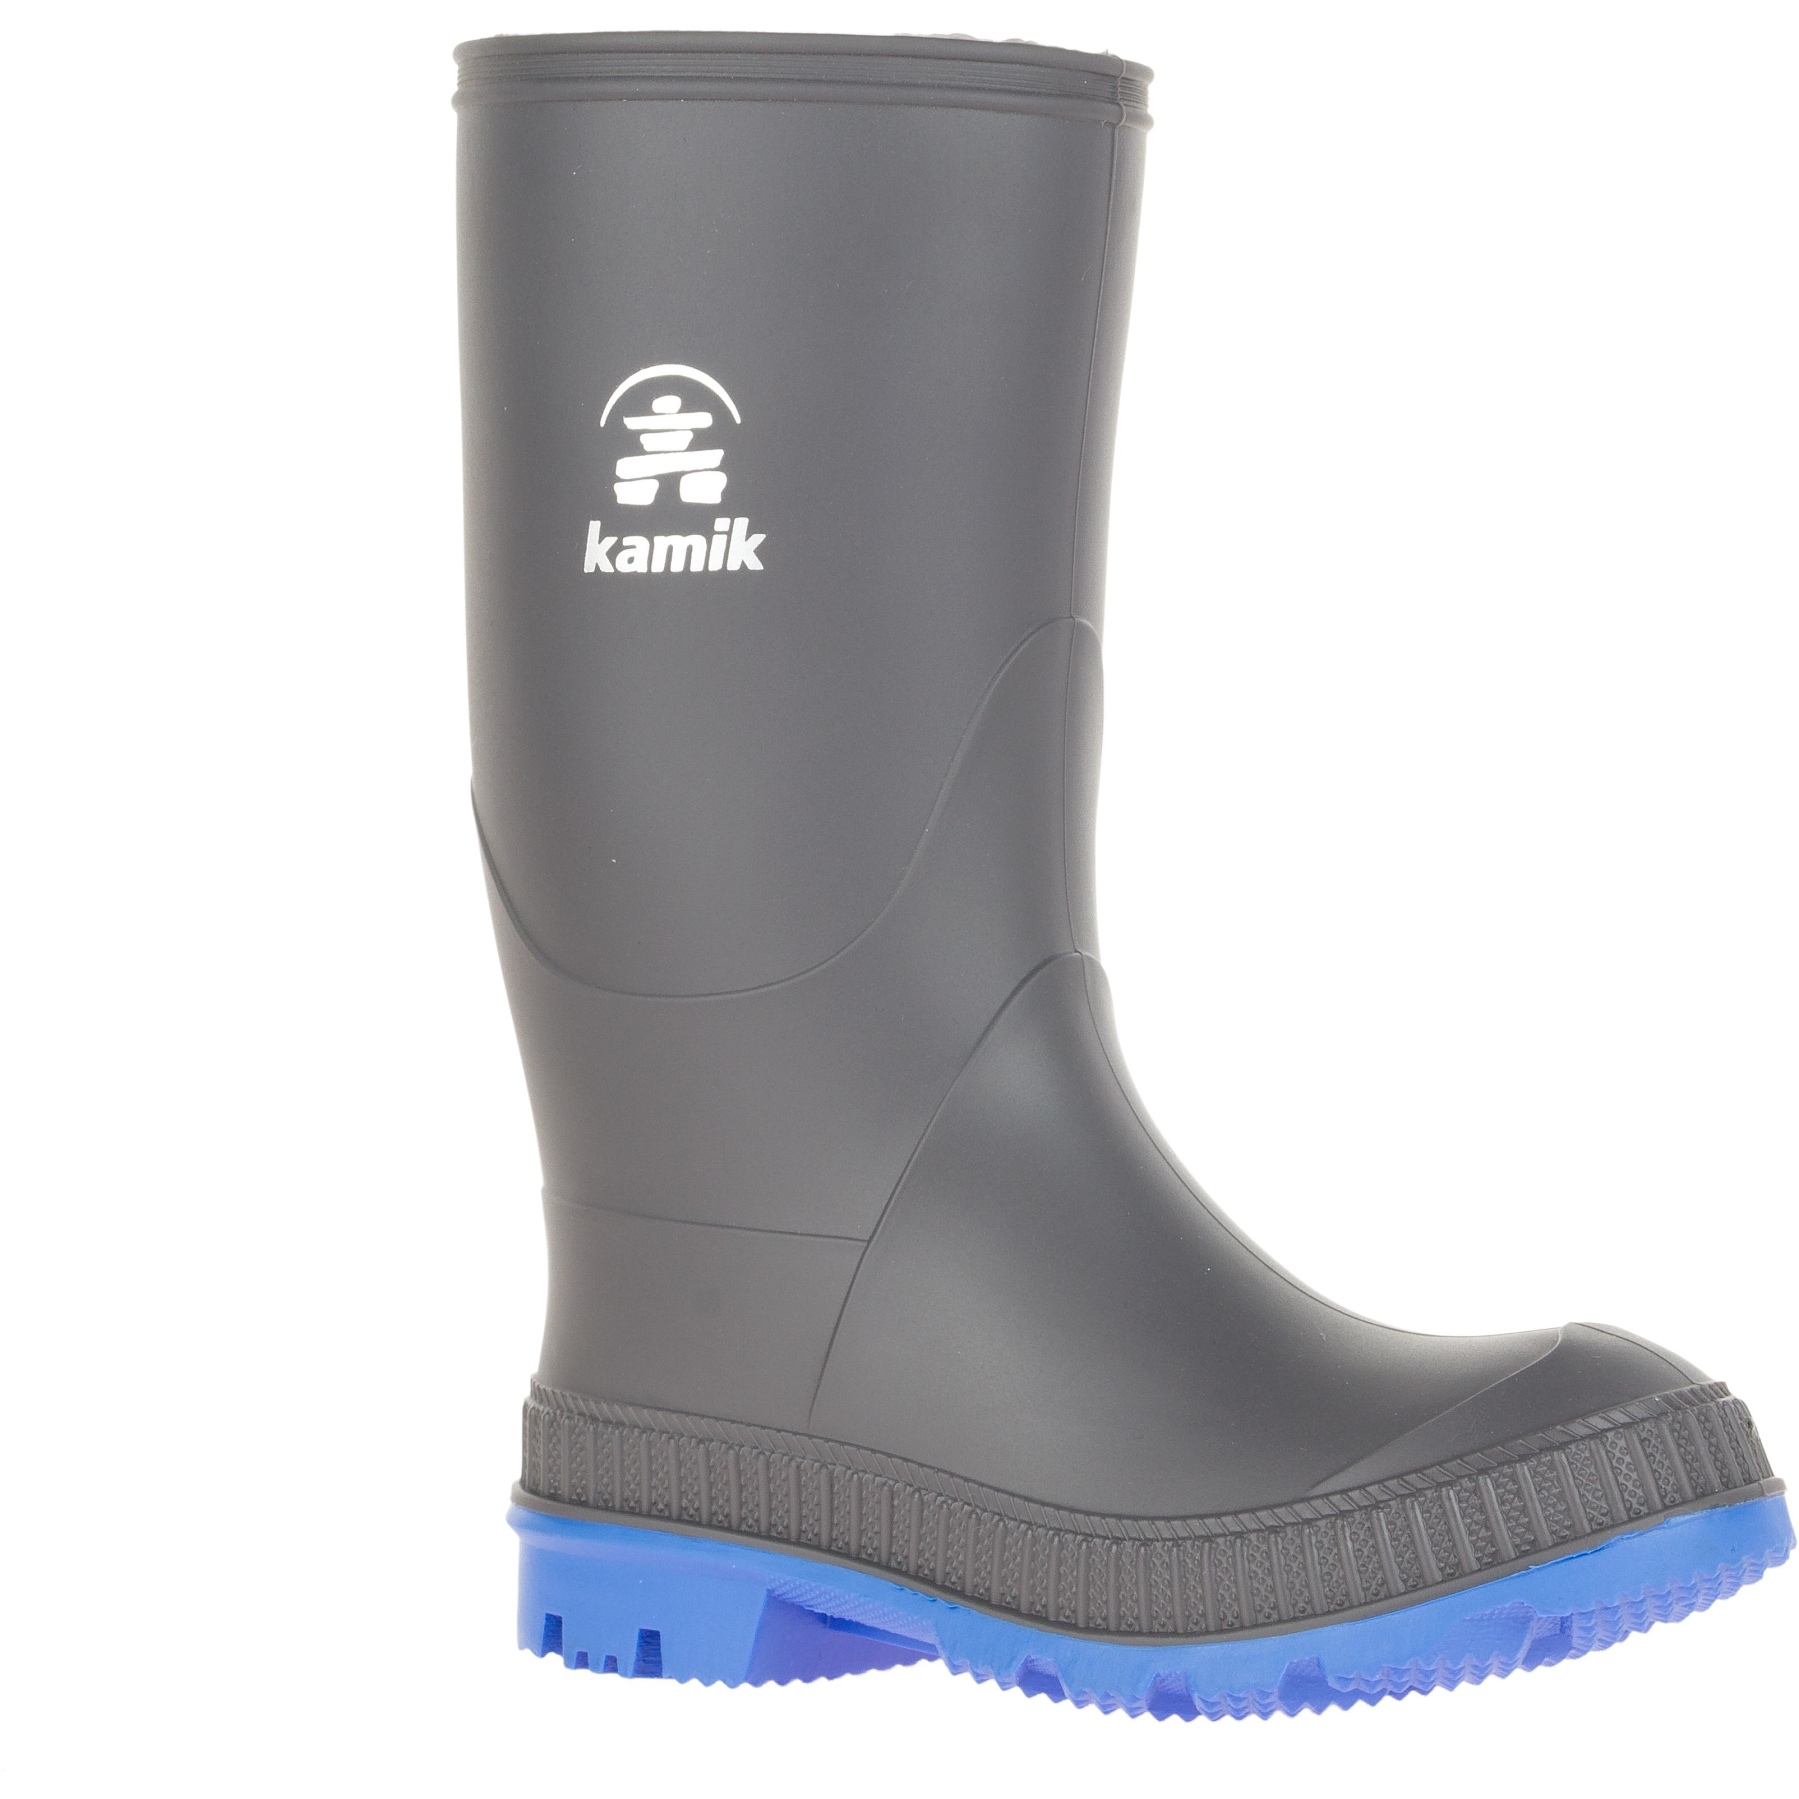 Productfoto van Kamik Stomp Kids Rubber Boots - Charcoal Blue